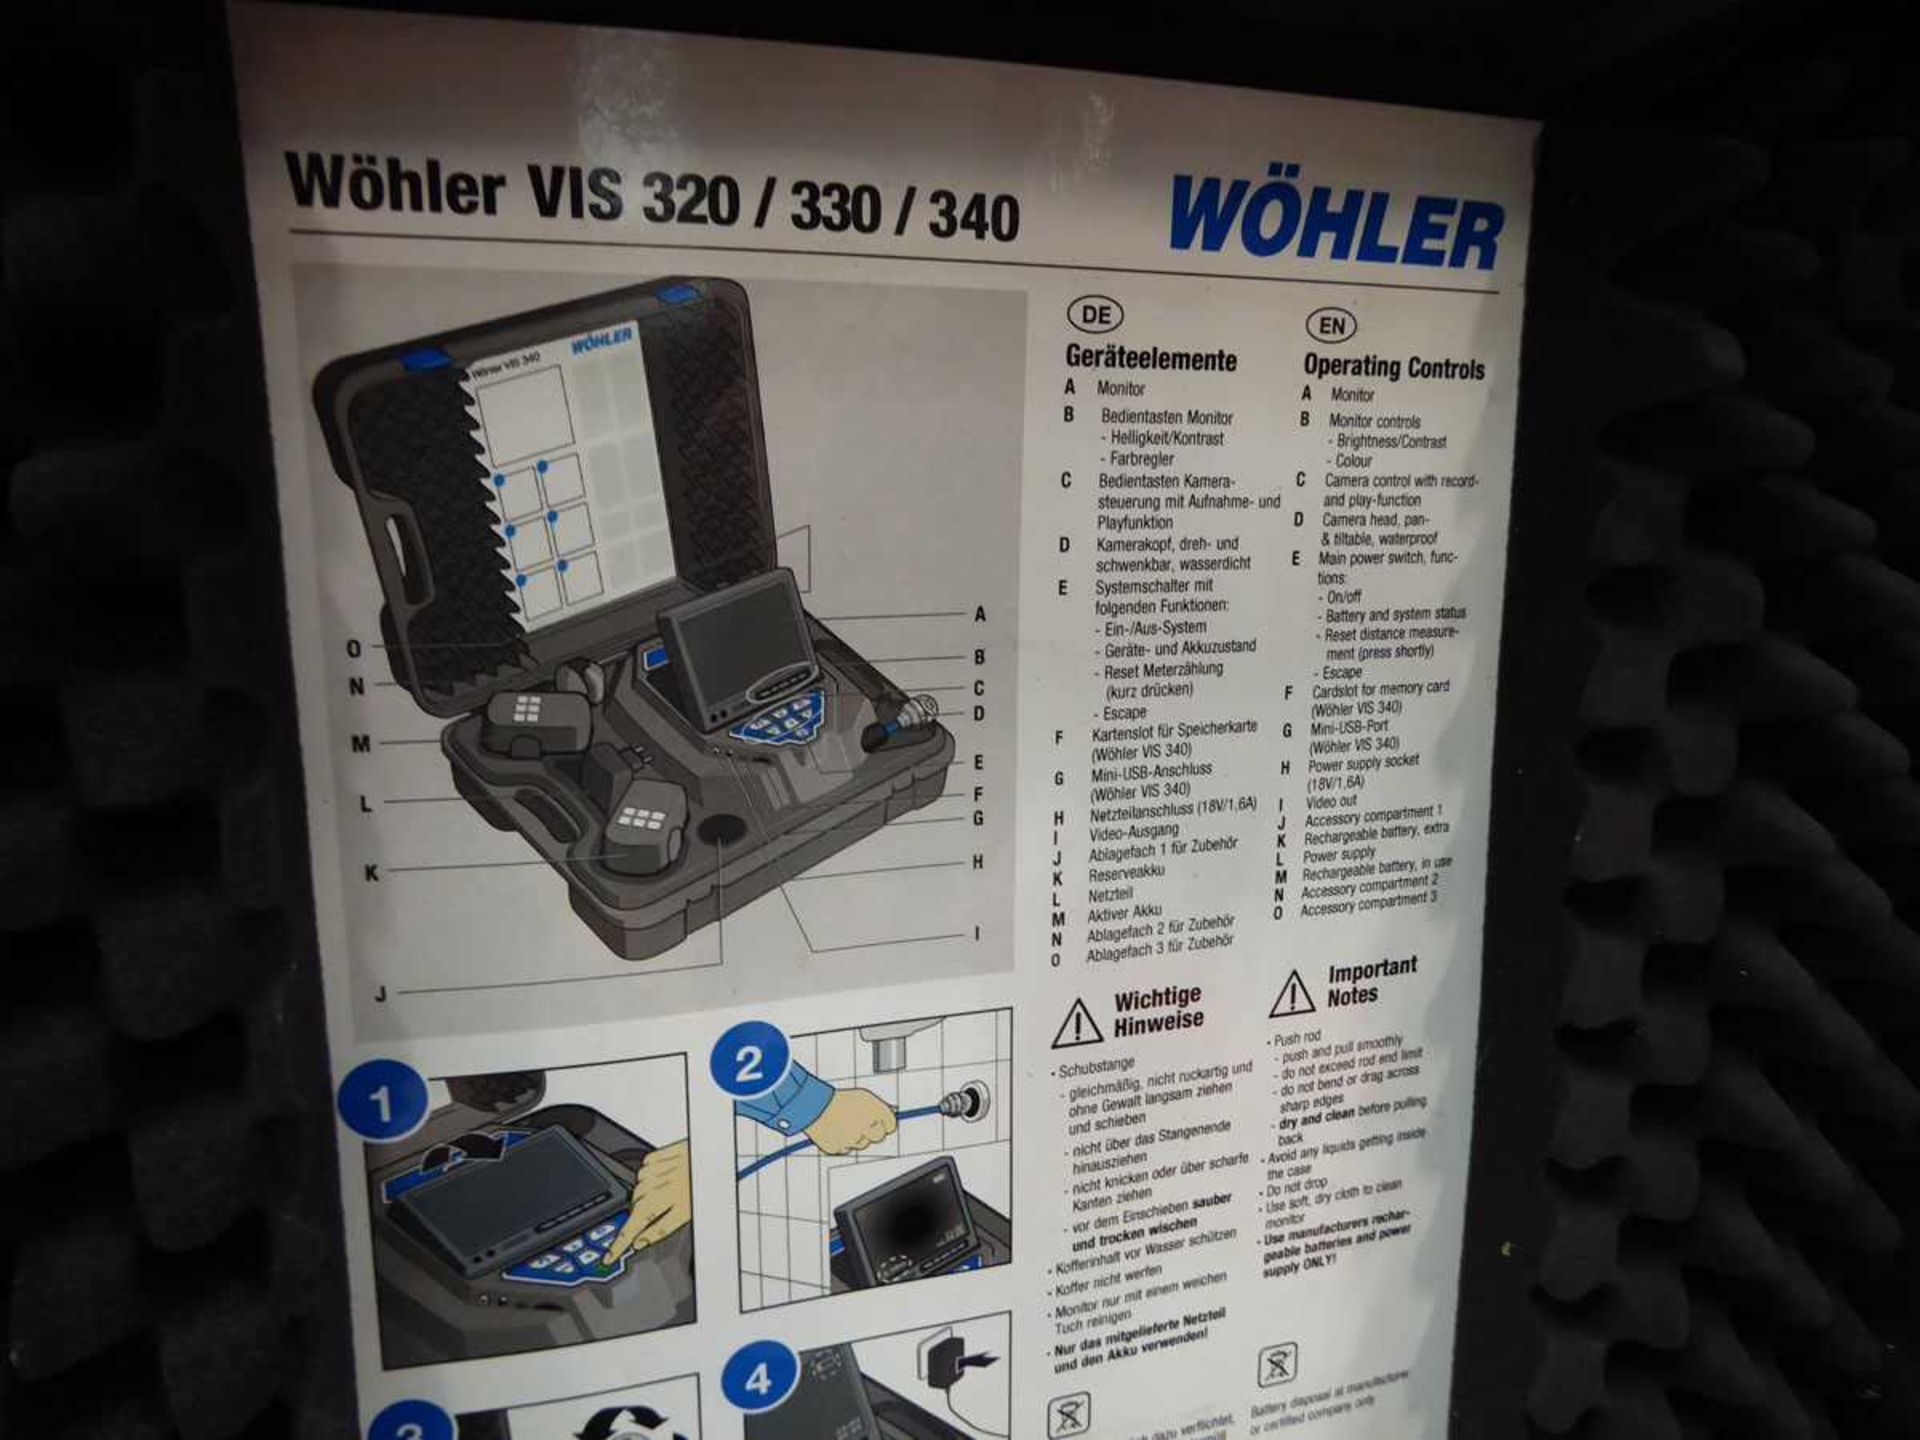 Wohler VIS 340 inspection video device - Image 2 of 3